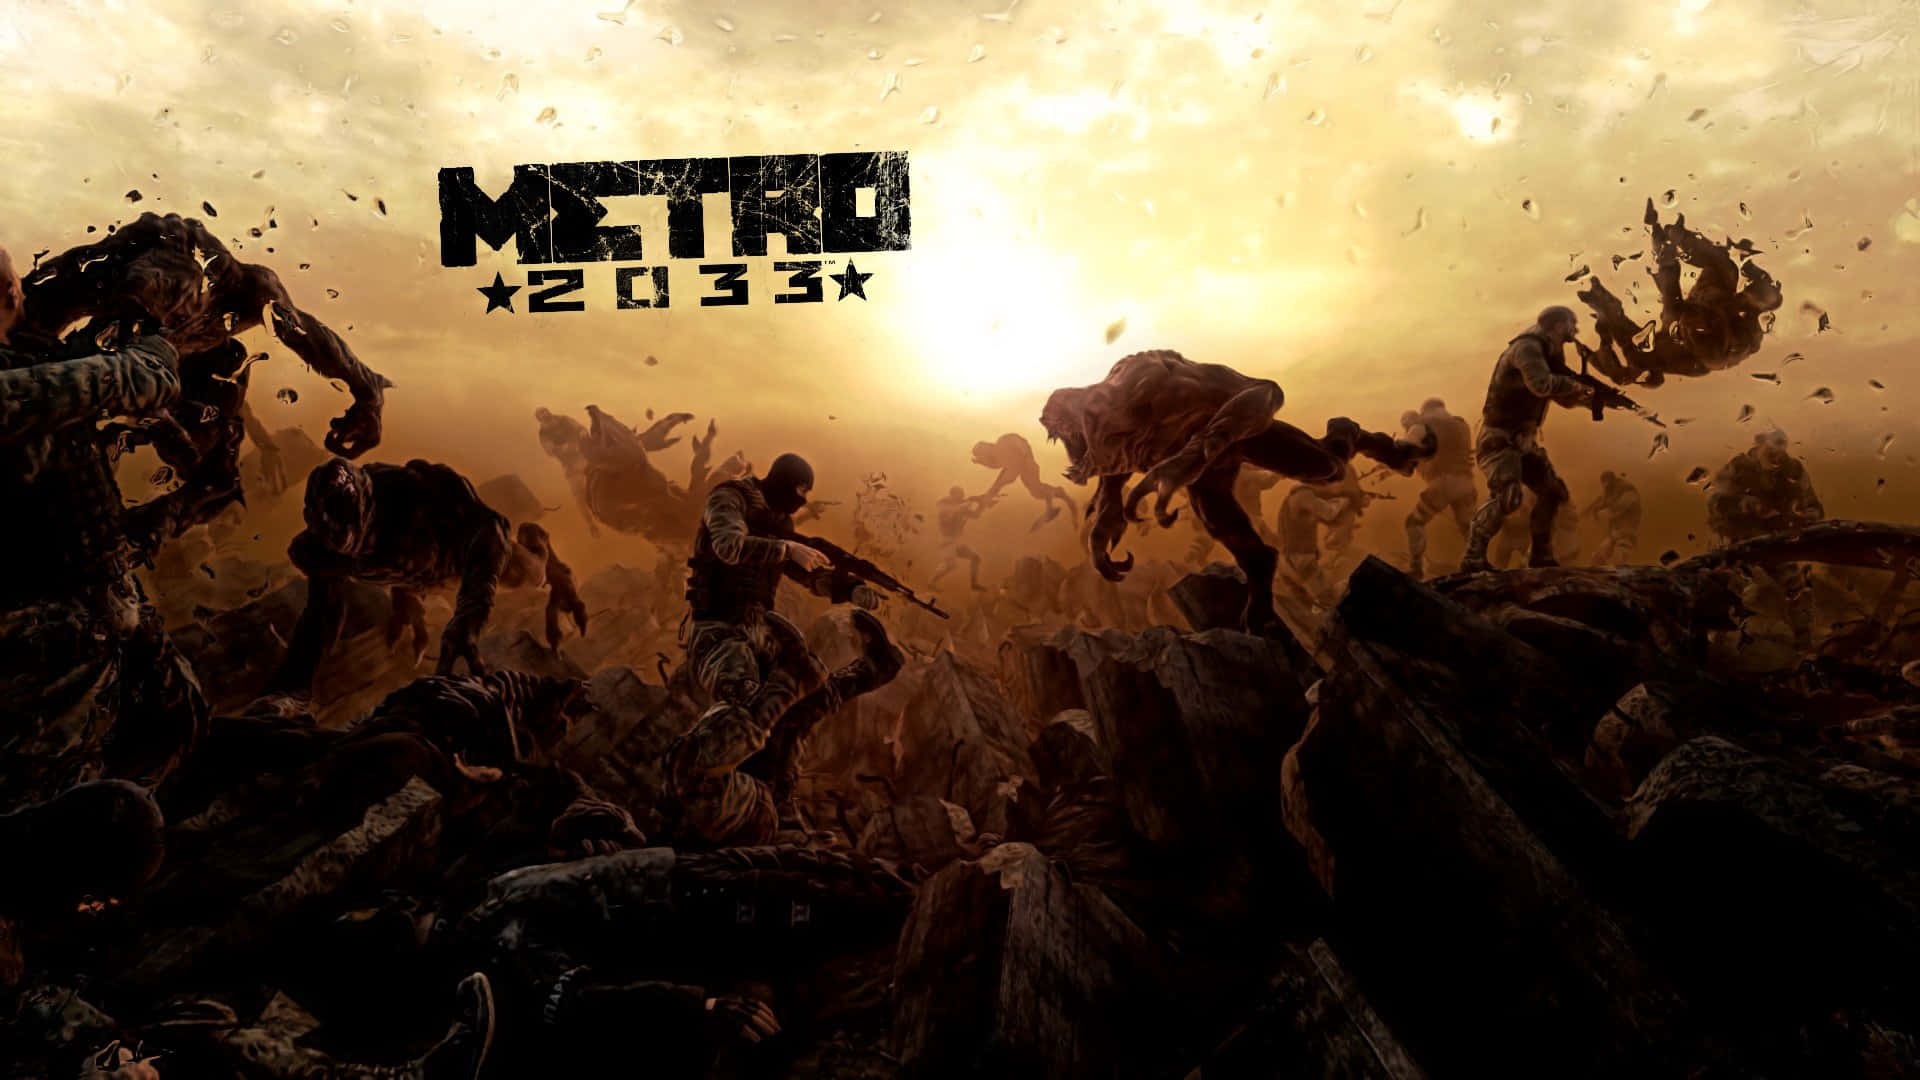 Metro2033 Game Apocalyptic Battle Wallpaper